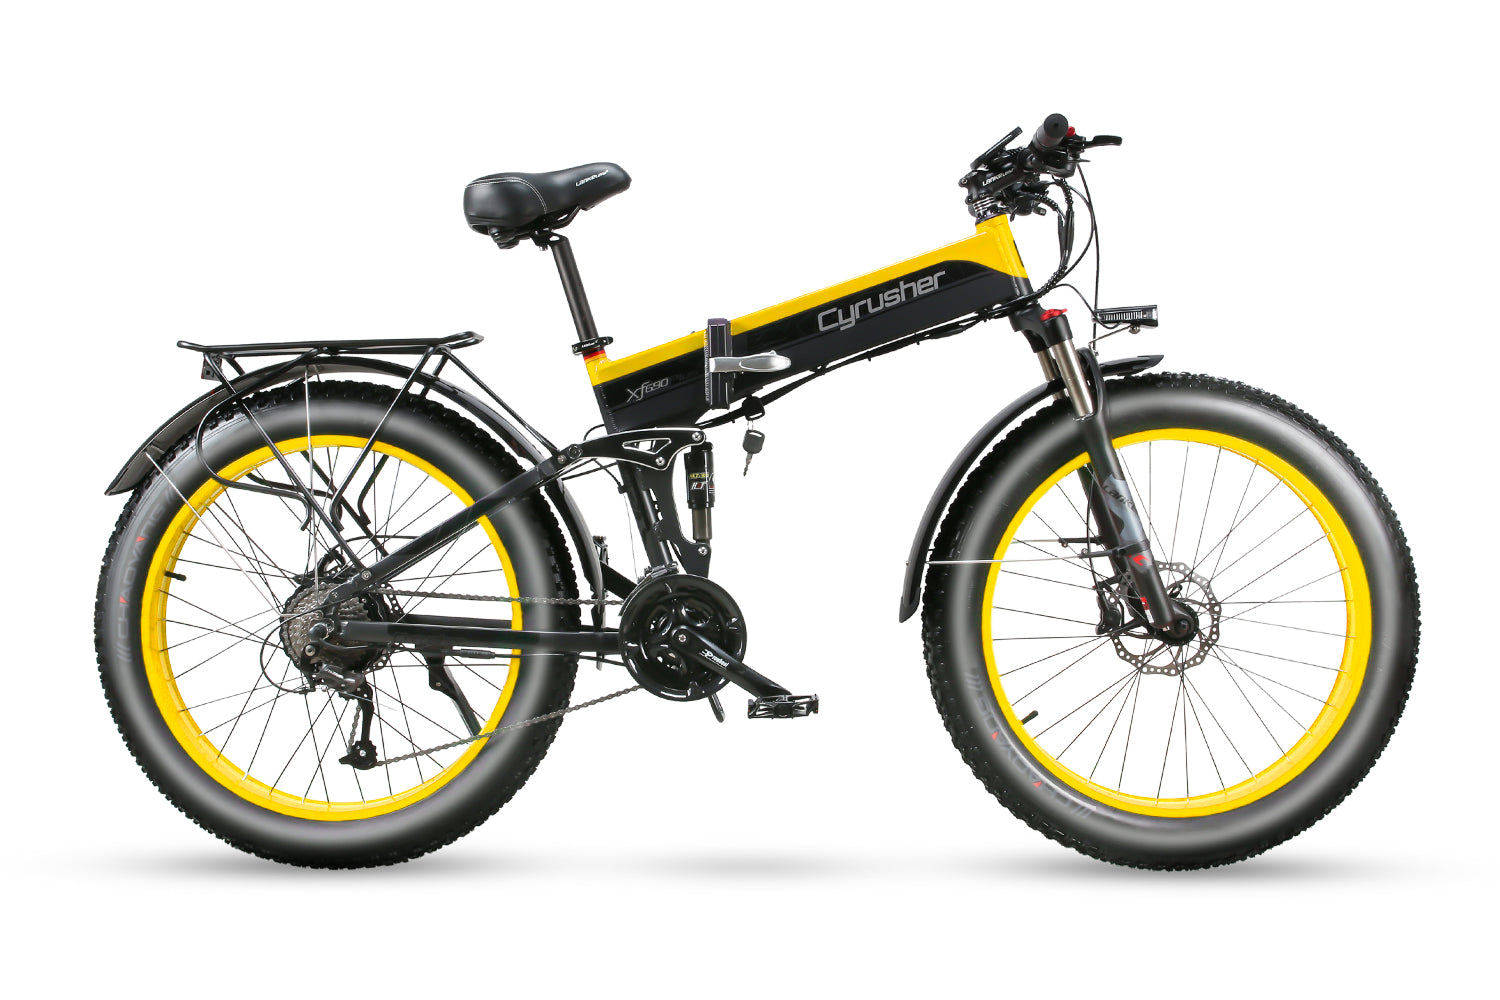 Cyrusher XF690 bici elettrica pieghevole 1000W